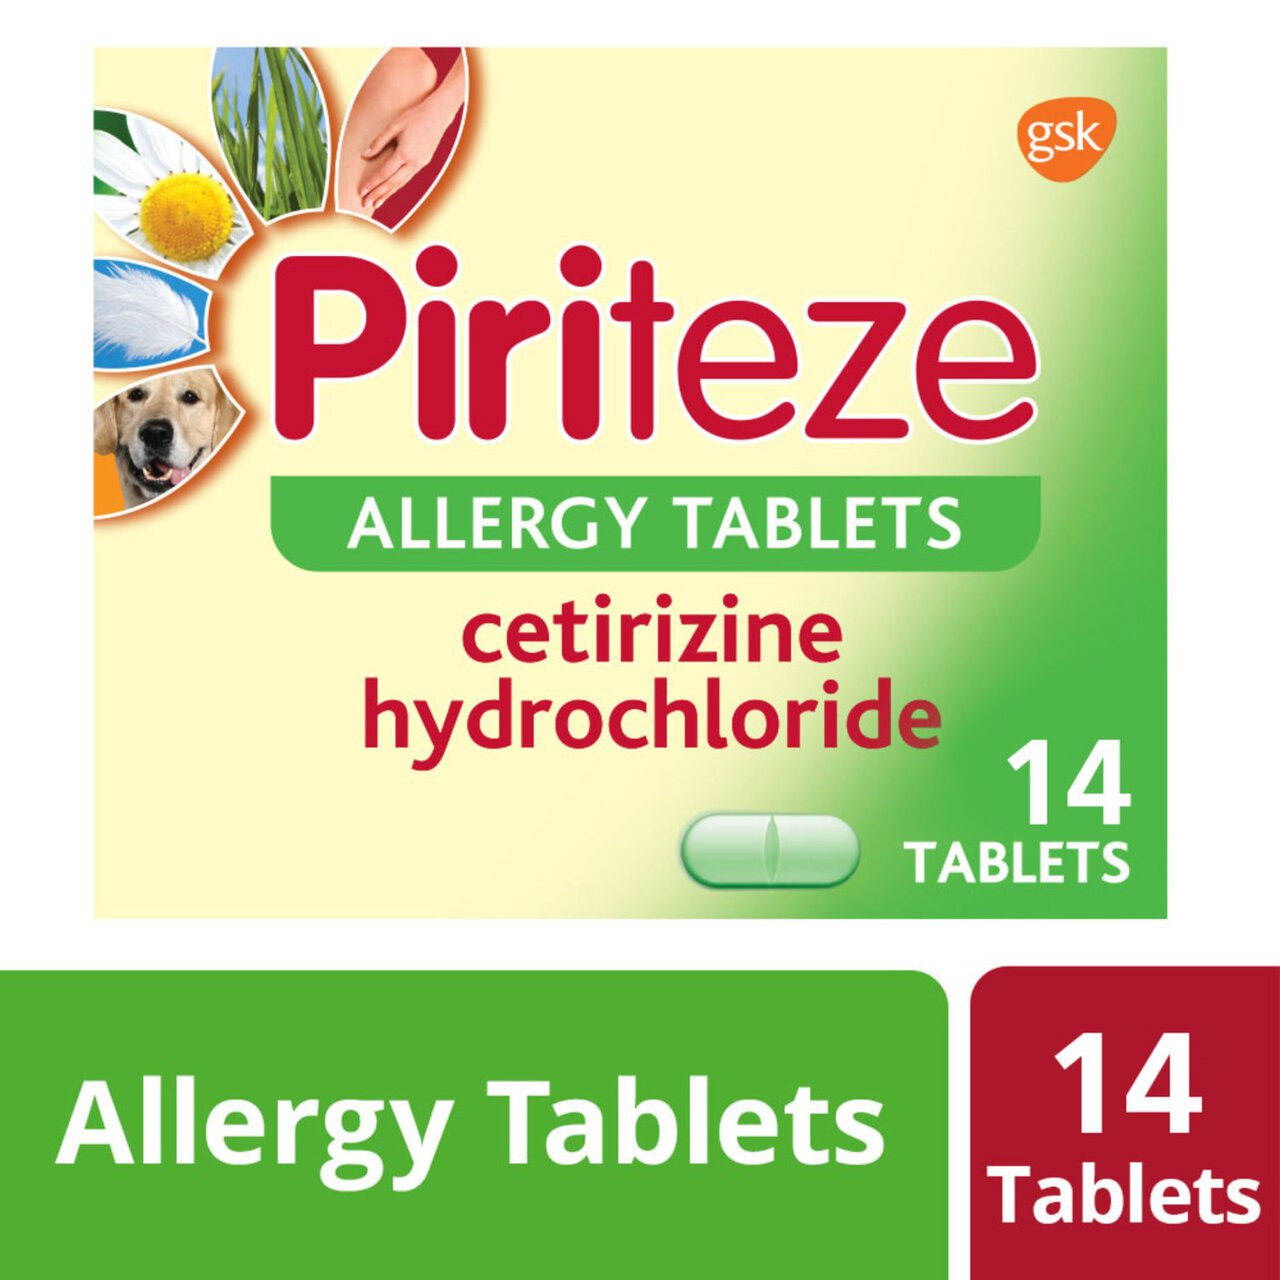 Piriteze Antihistamine Allergy Relief Tablets Cetrizine 14 per pack